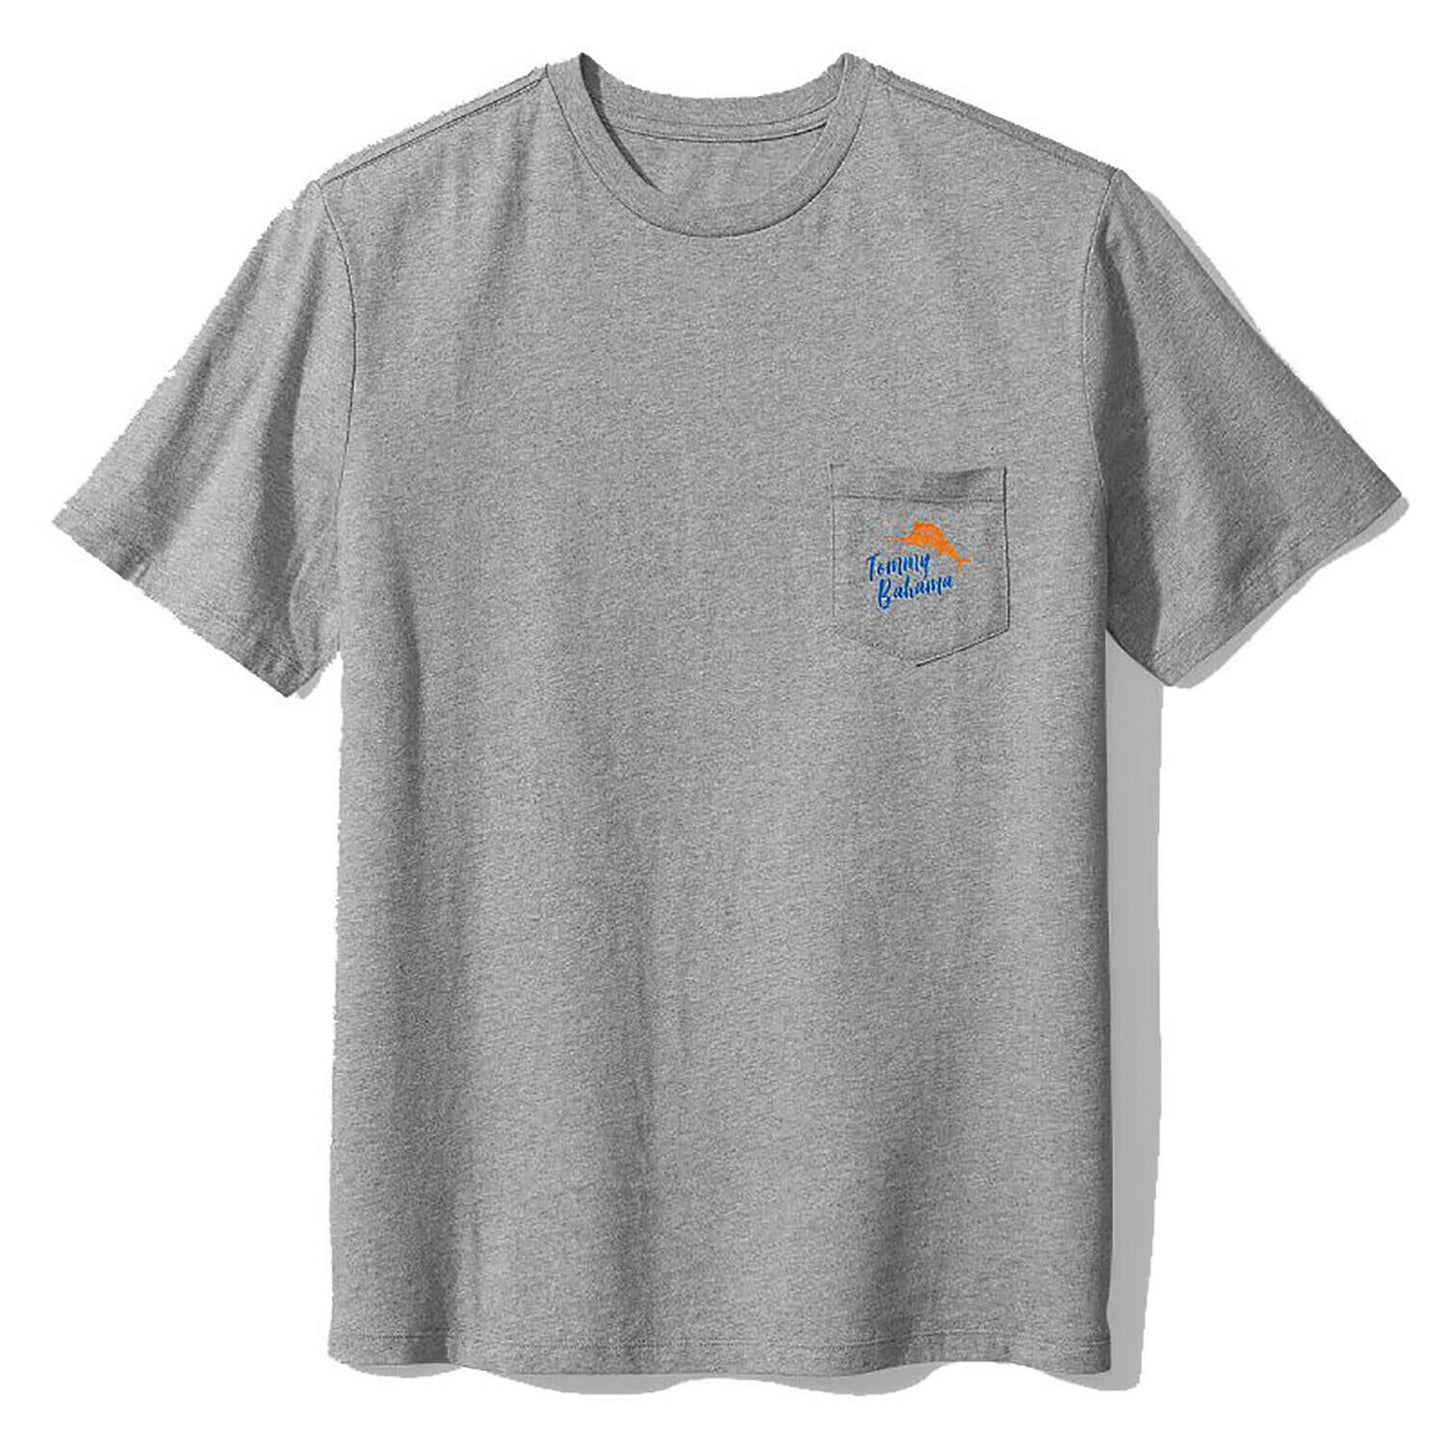 TOMMY BAHAMA Beach Bracket Men's T-Shirt - Grey -  S M L XL 2XL